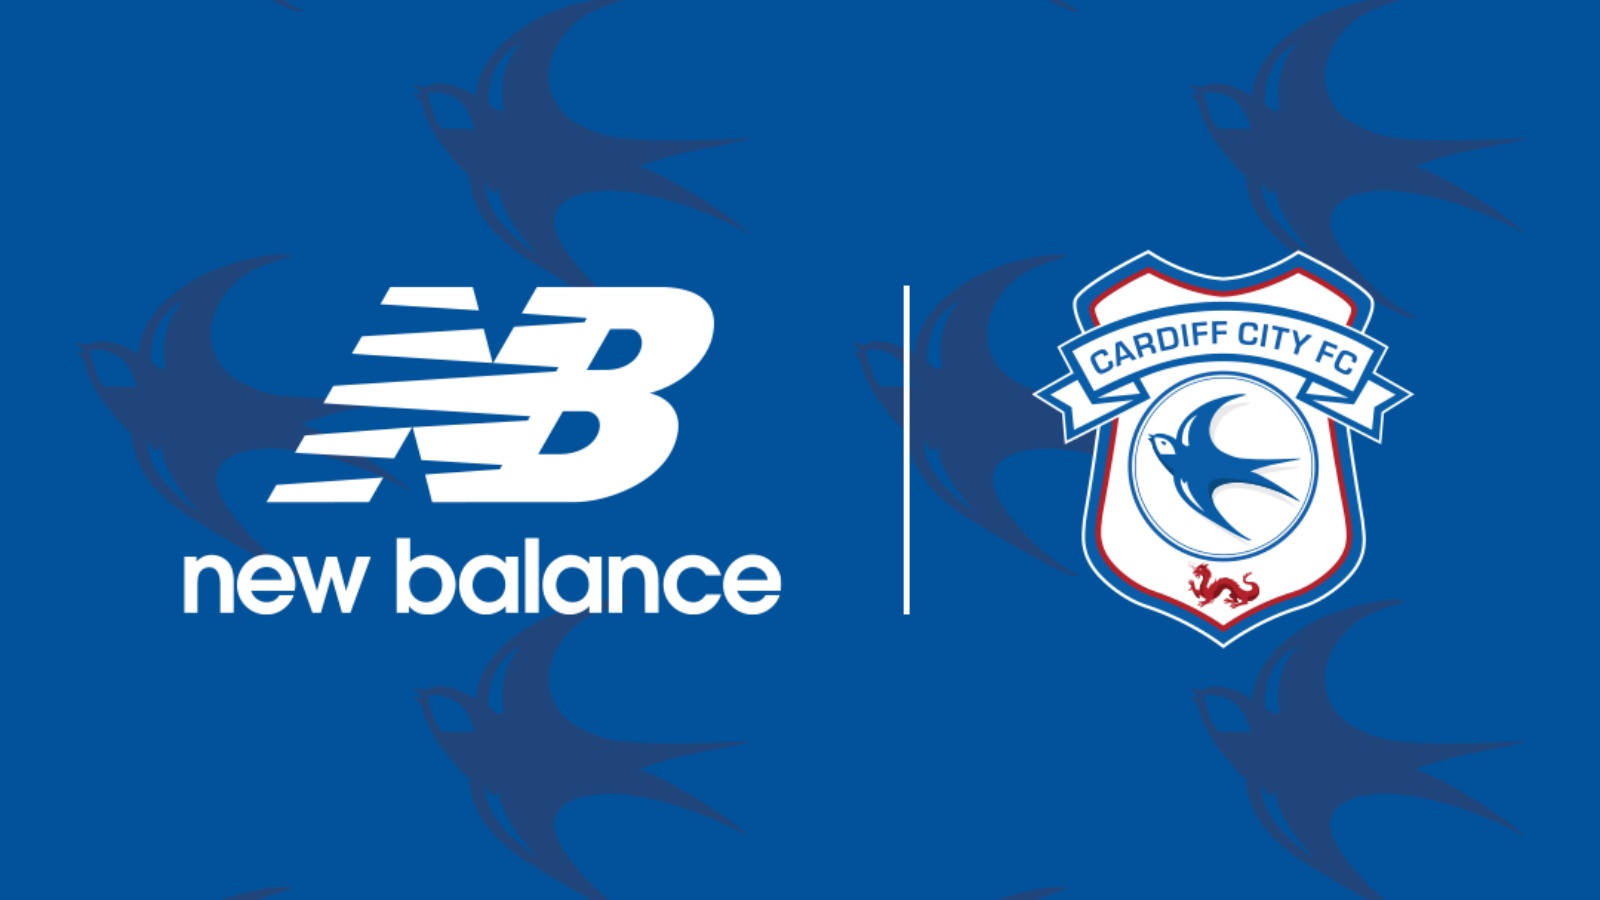 Cardiff City Announce New Balance Kit Deal - Footy Headlines